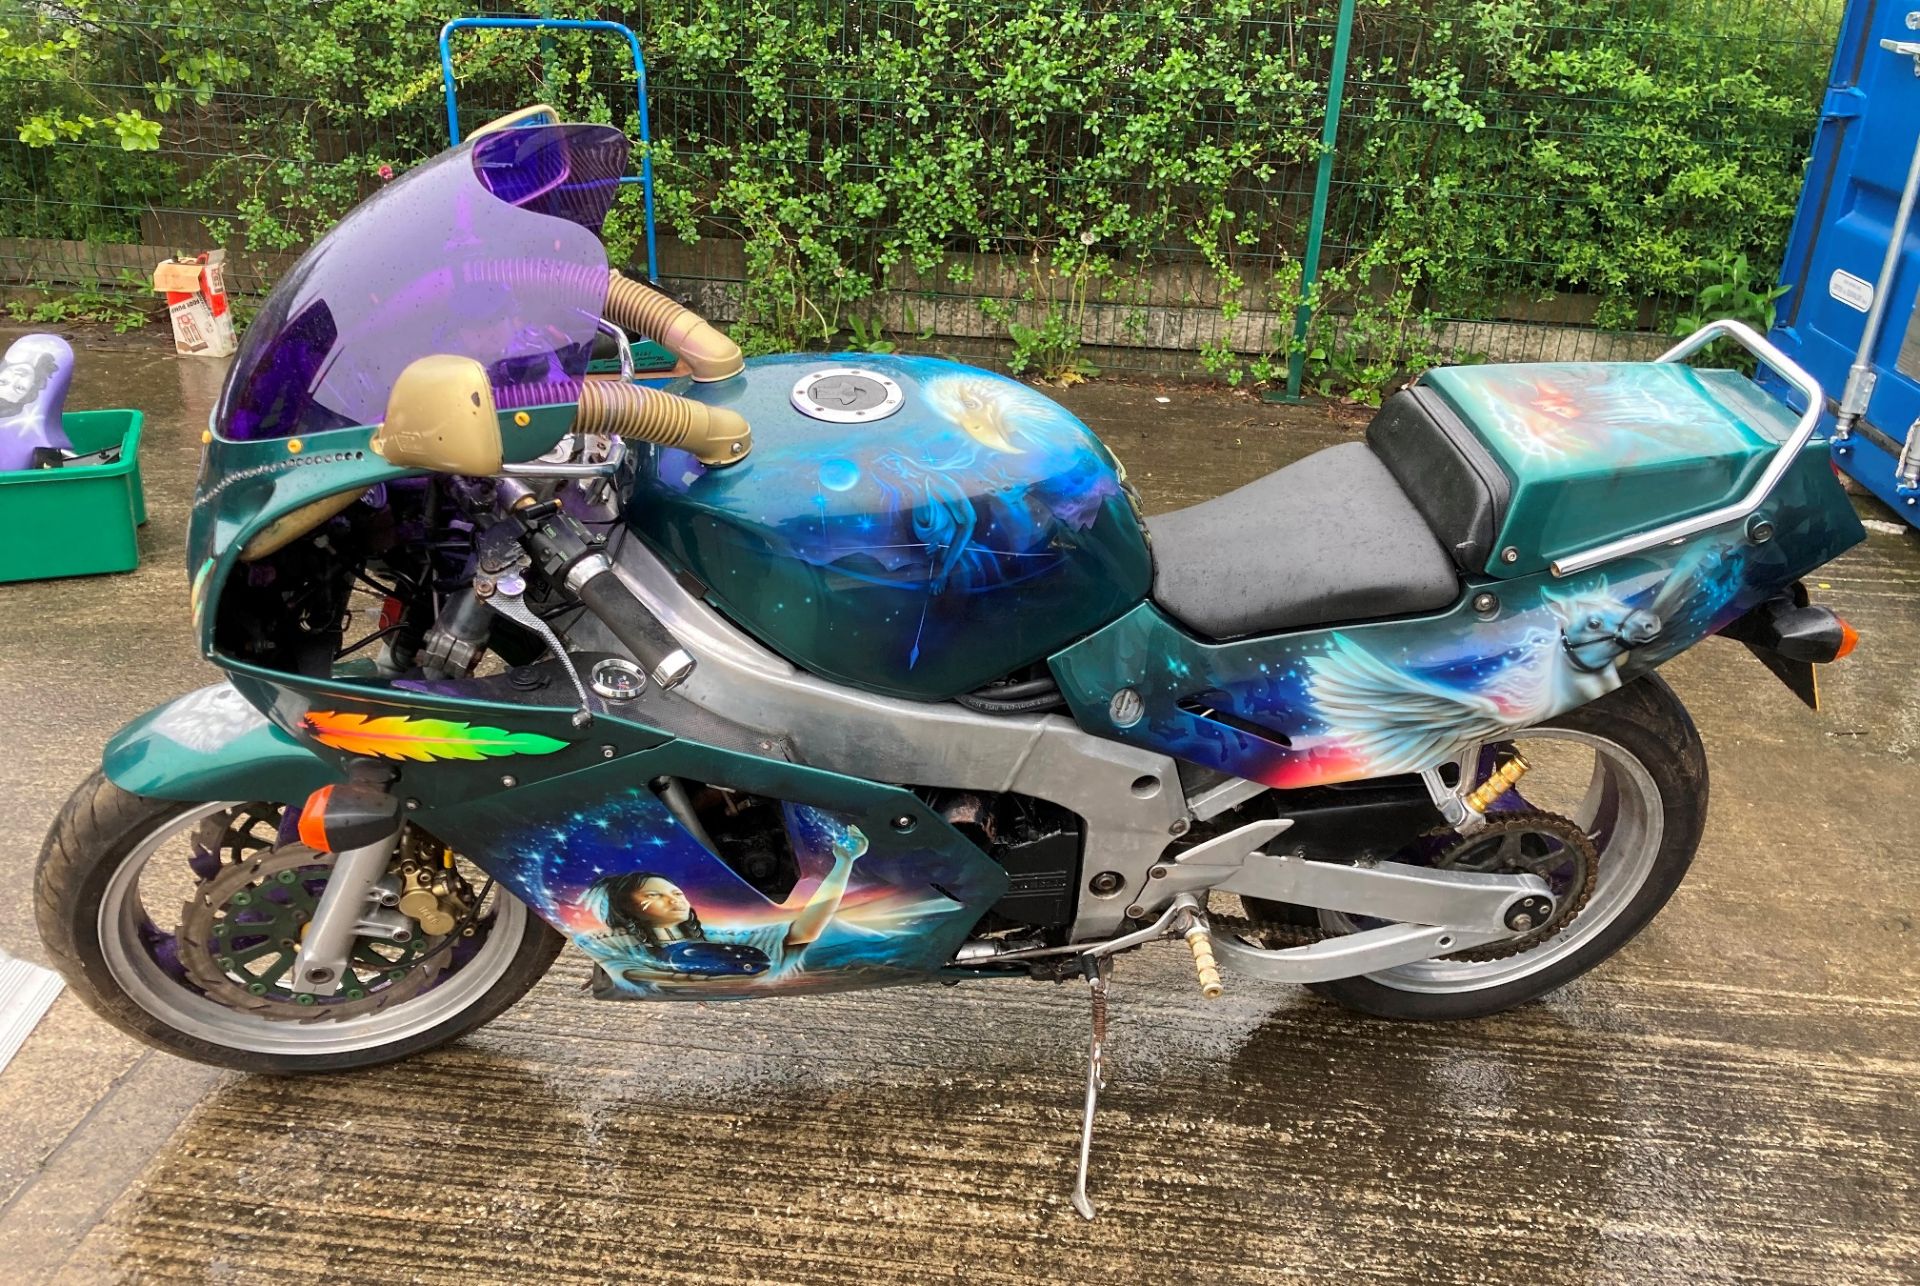 KAWASAKI 750 MOTORCYCLE - Petrol - Green/purple. Sold as a project restoration/spares/repairs. - Image 2 of 4